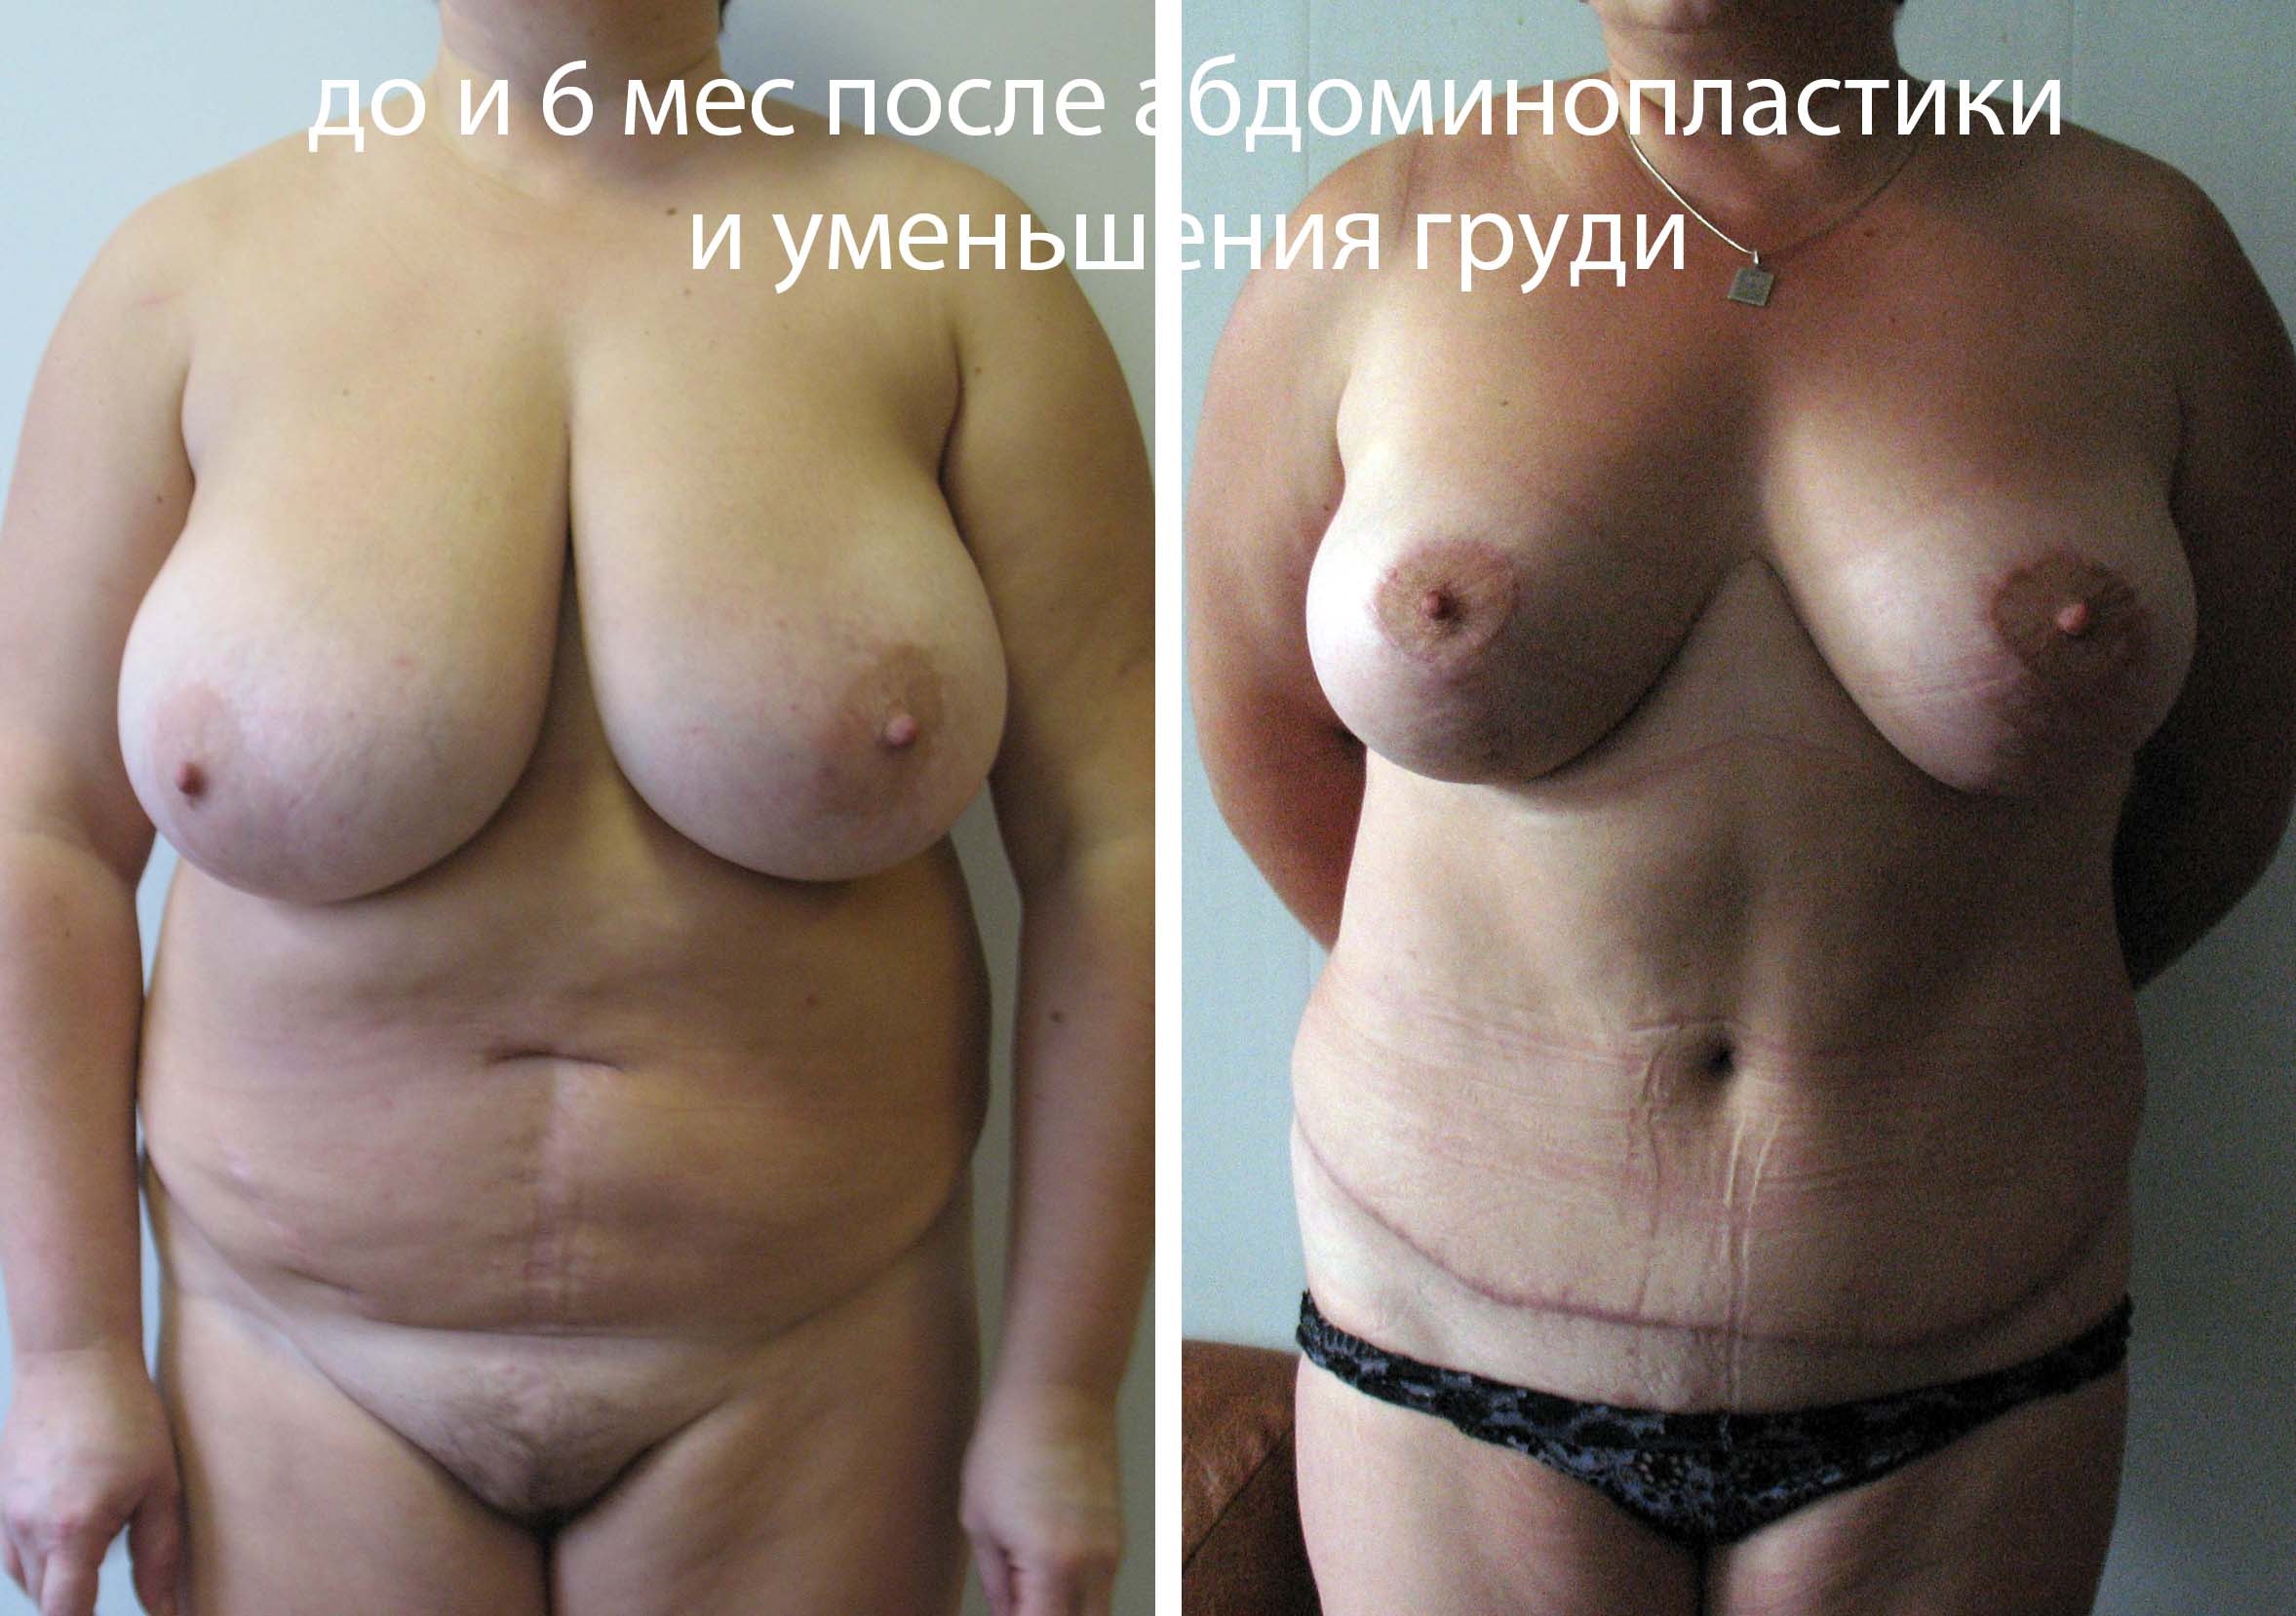 коррекция груди женщин фото 28